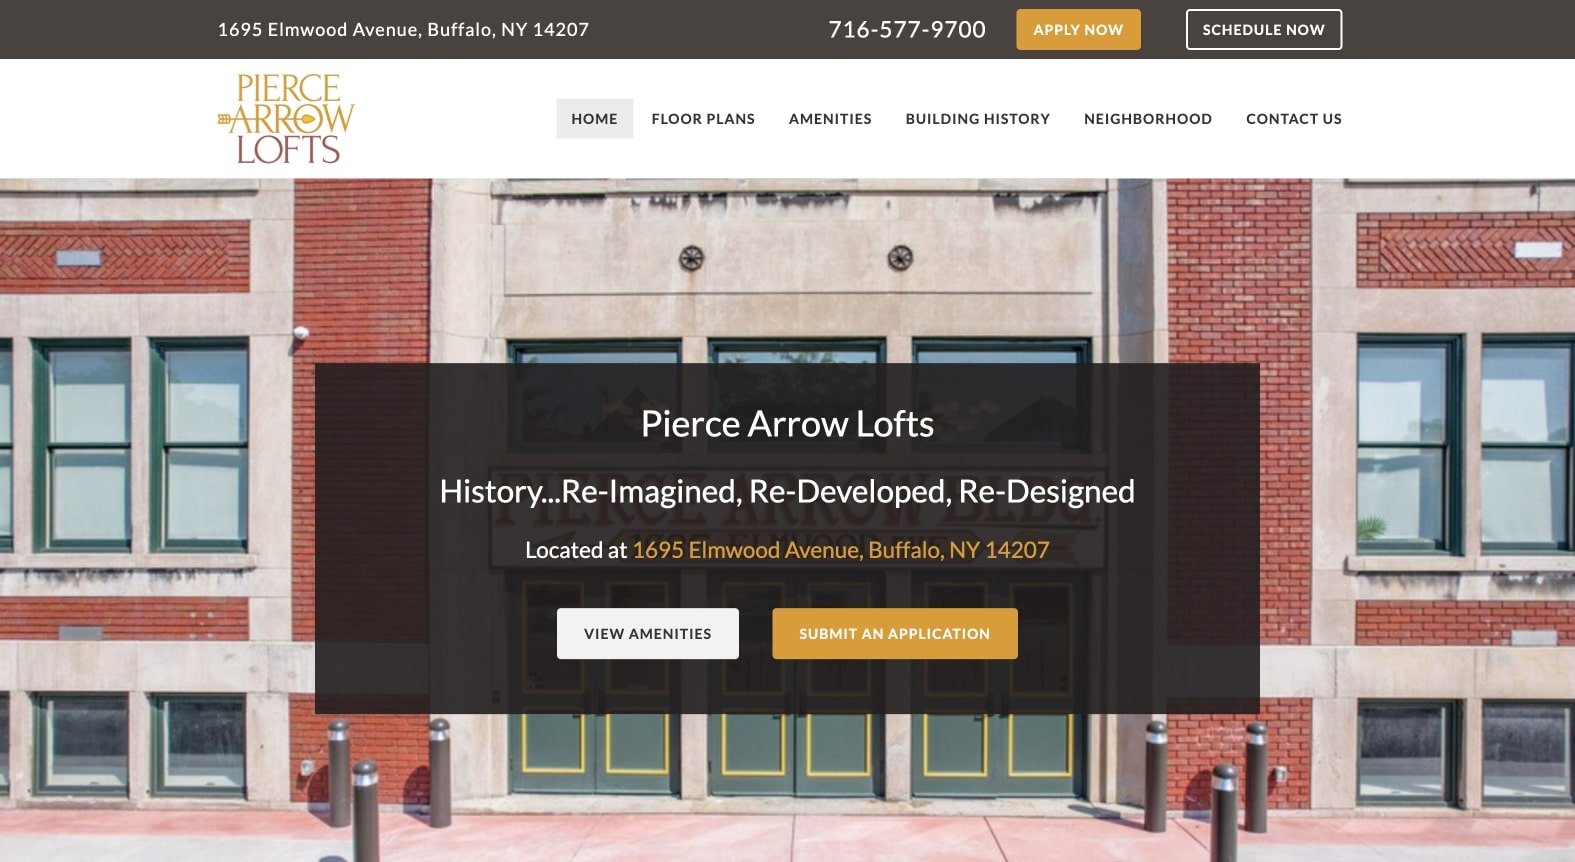 Pierce Arrow Lofts